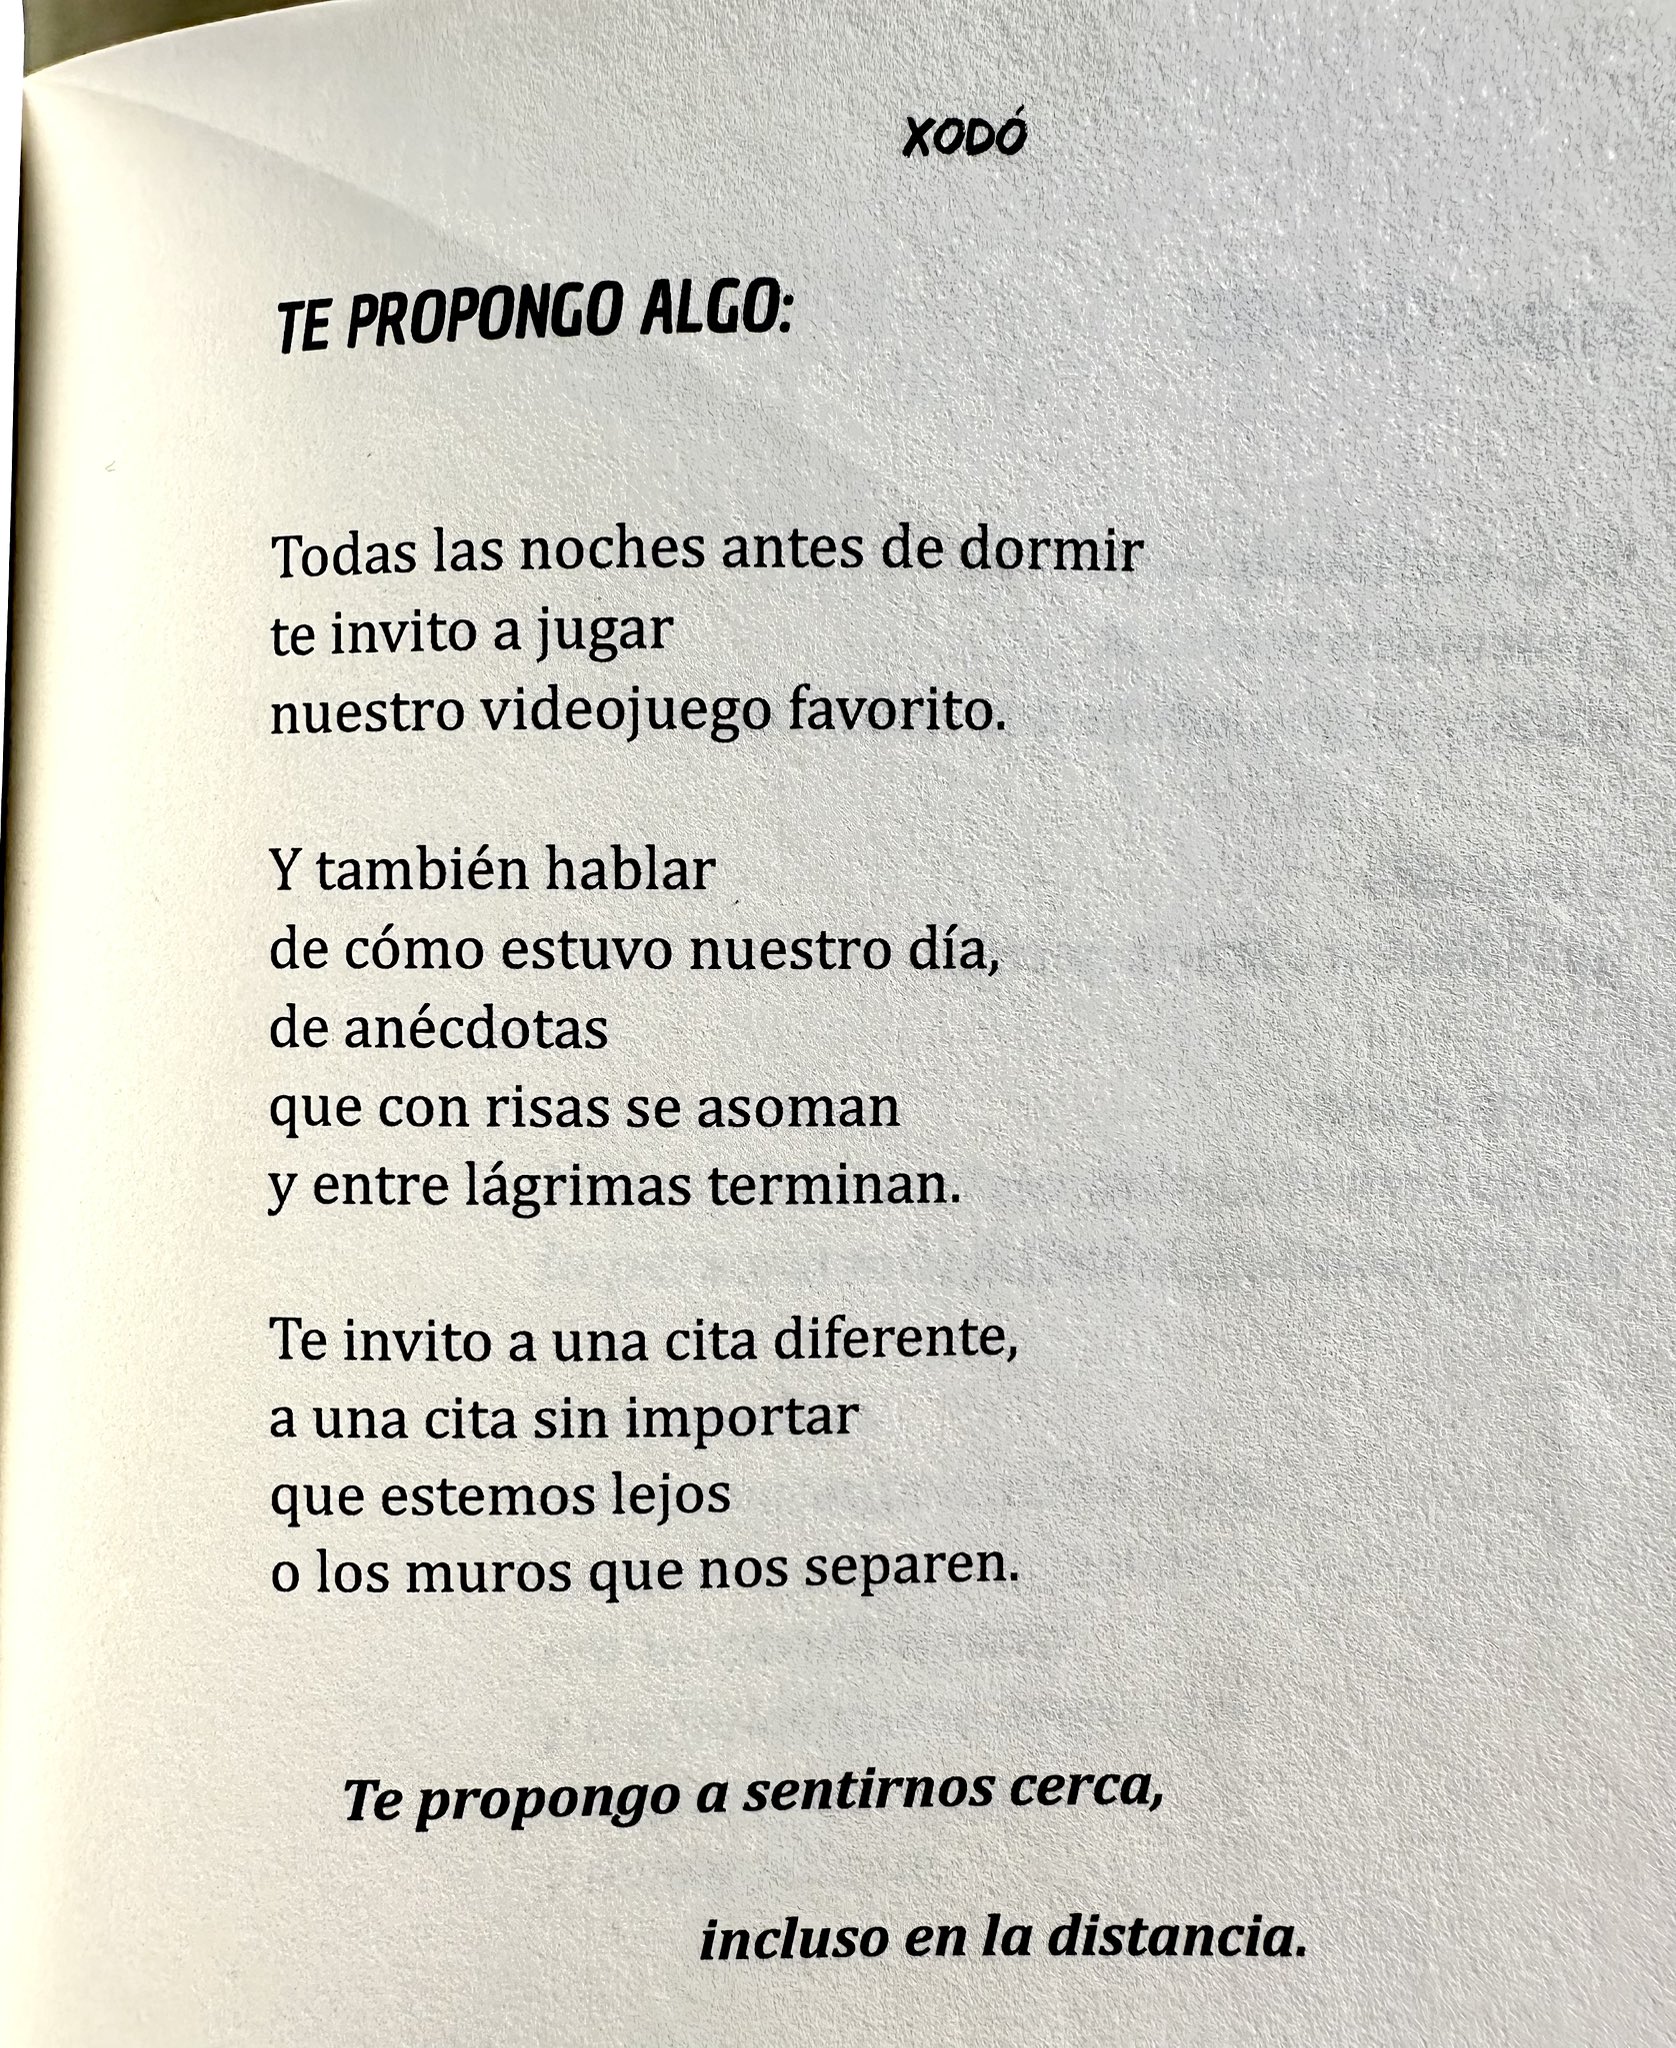 Jairo Guerrero on X: Libro: “Xodó” 📕  / X